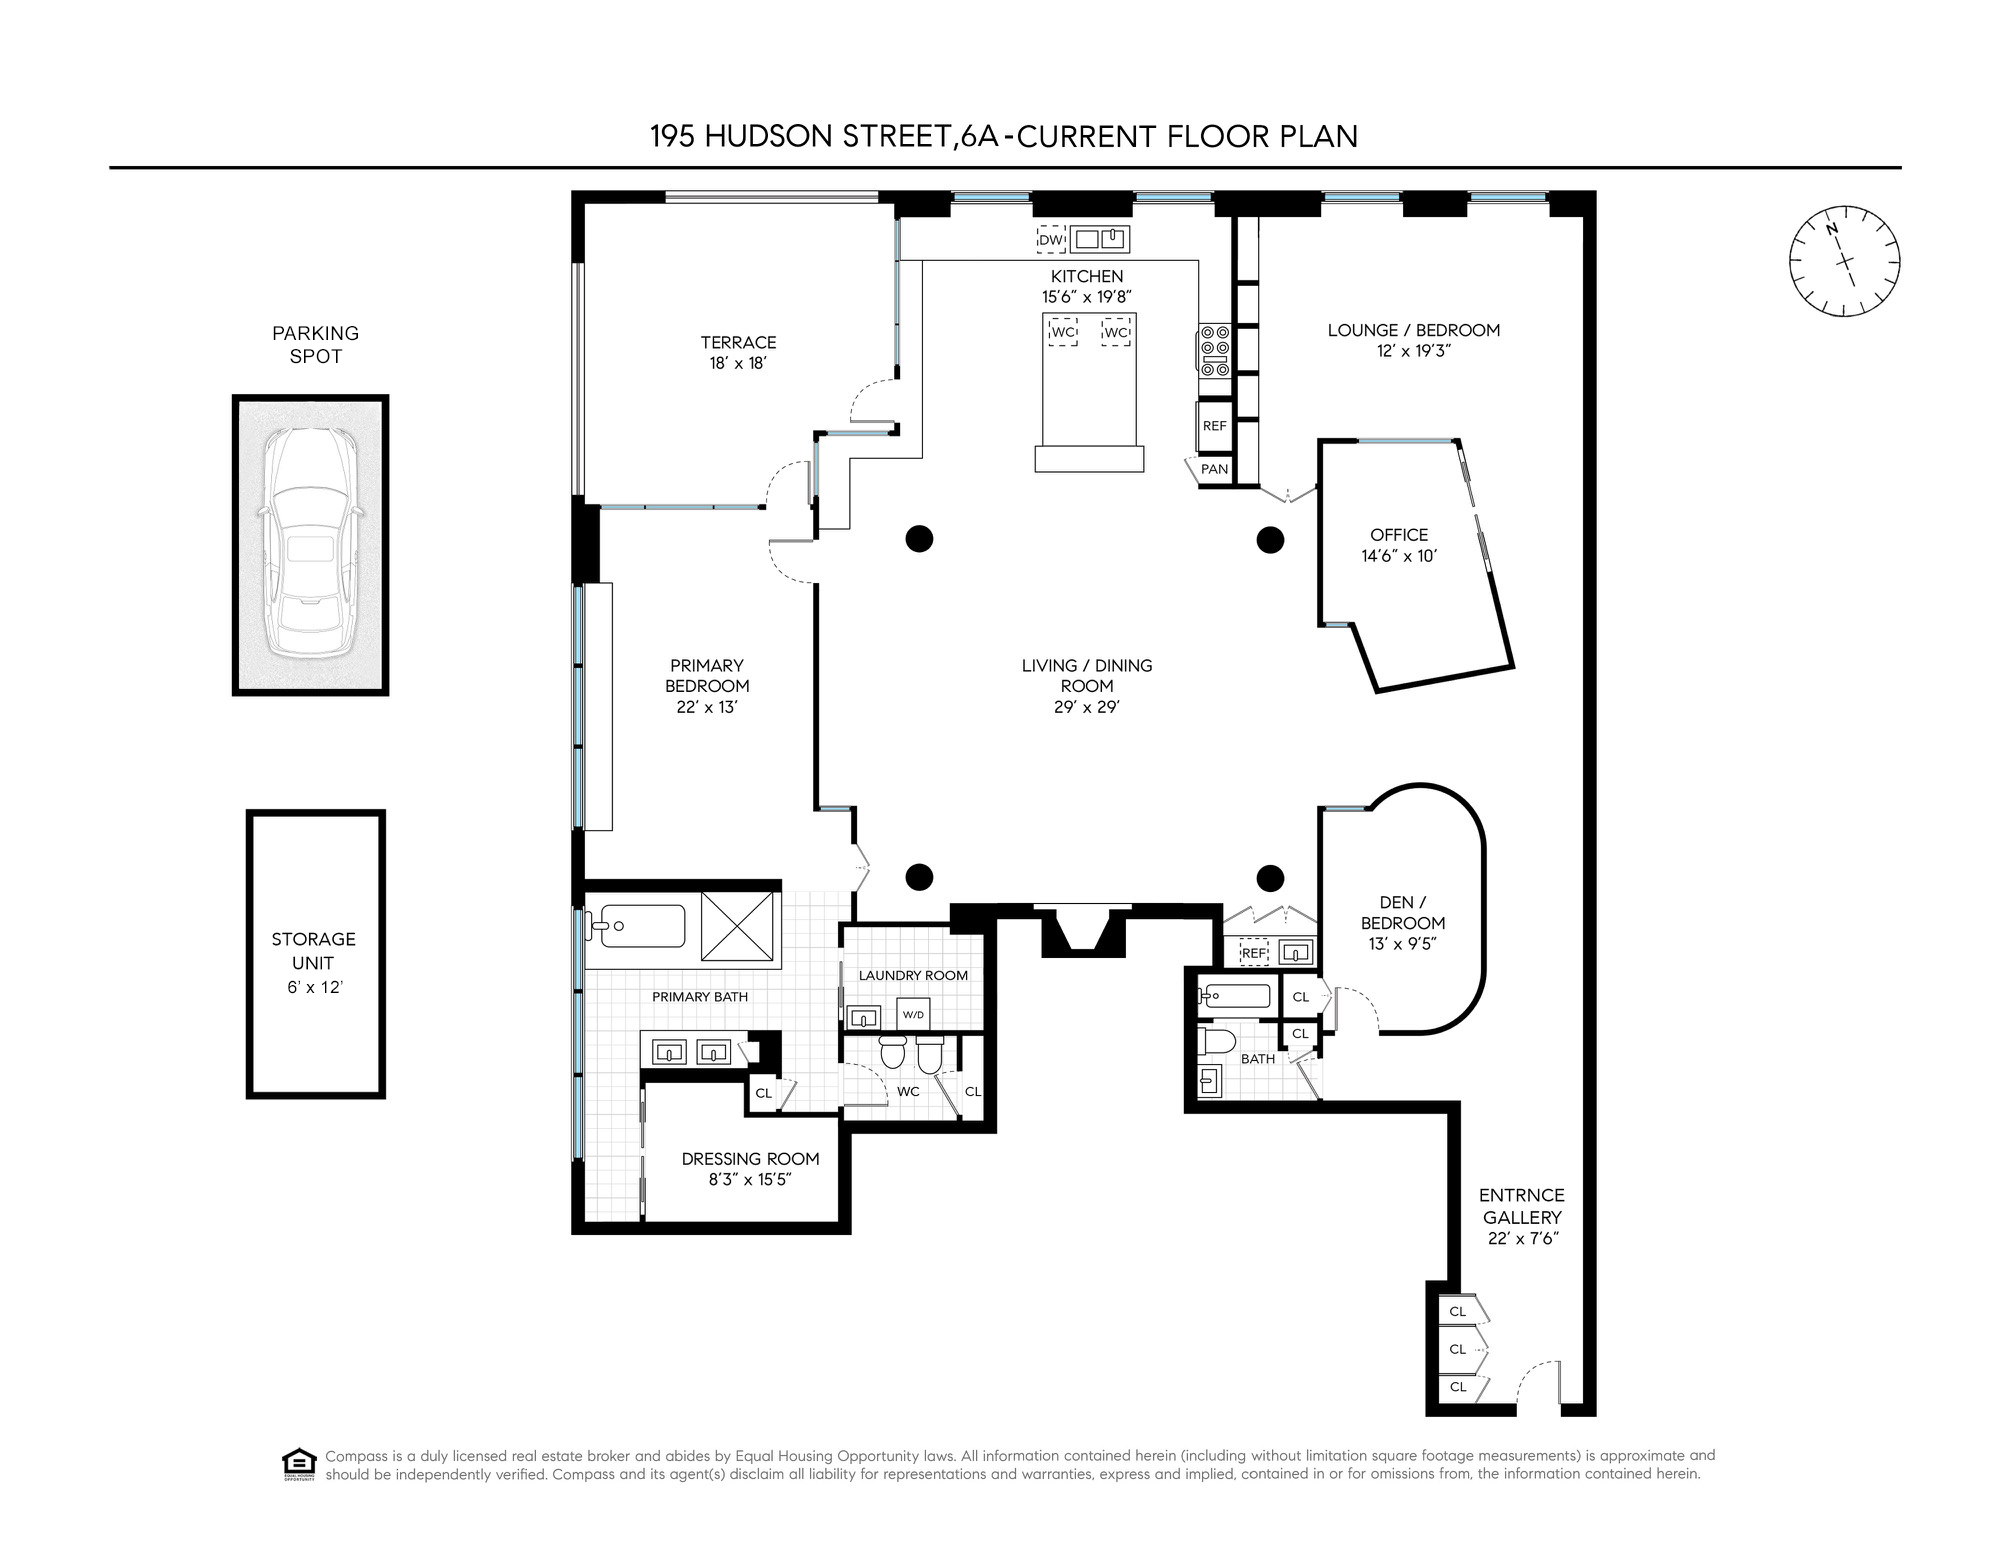 Floorplan for 195 Hudson Street, 6A